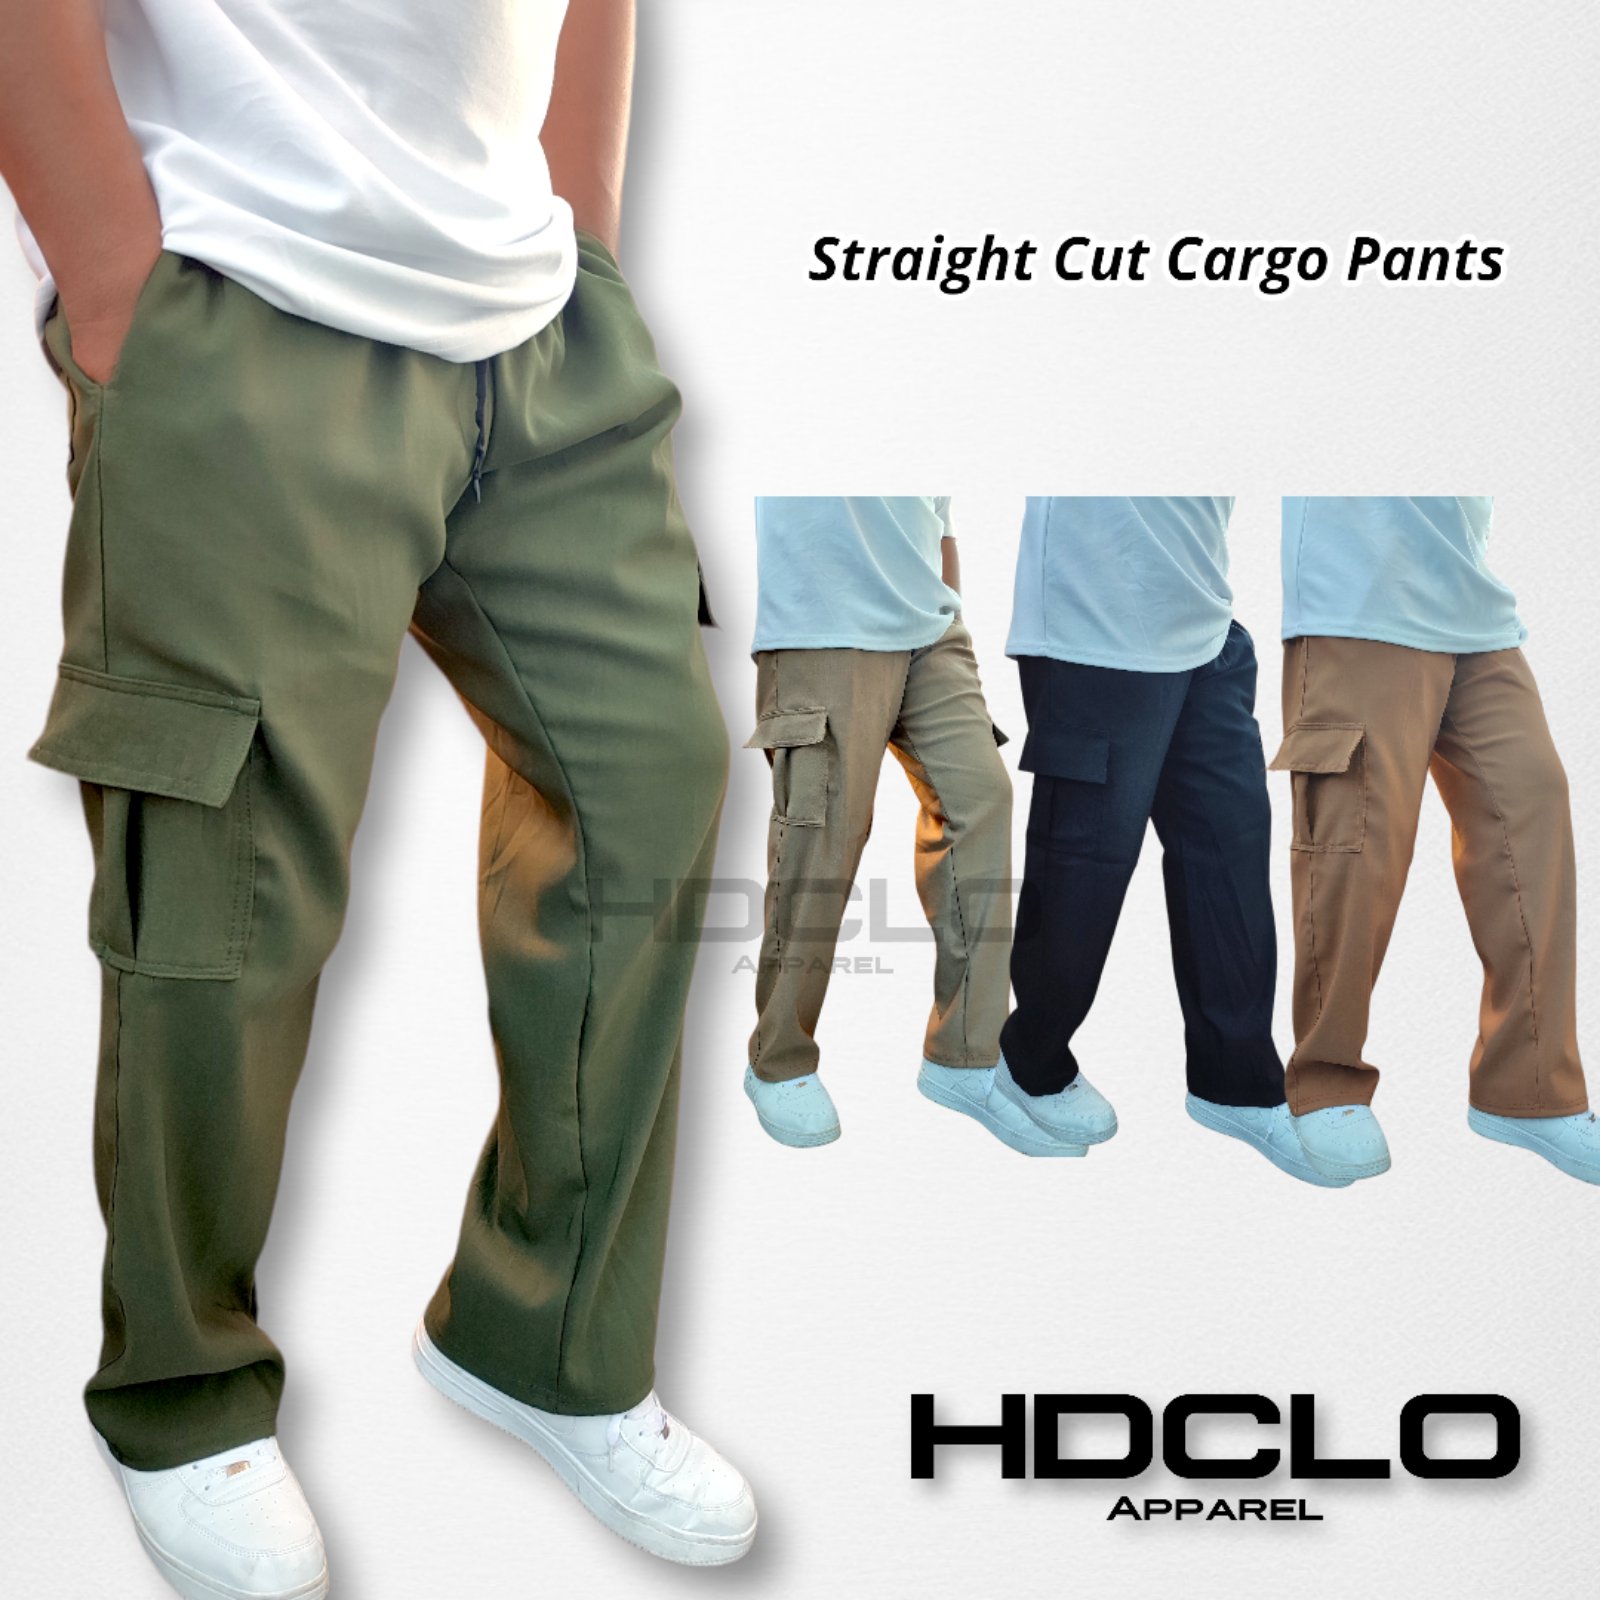 Straight Cut Cargo Pants